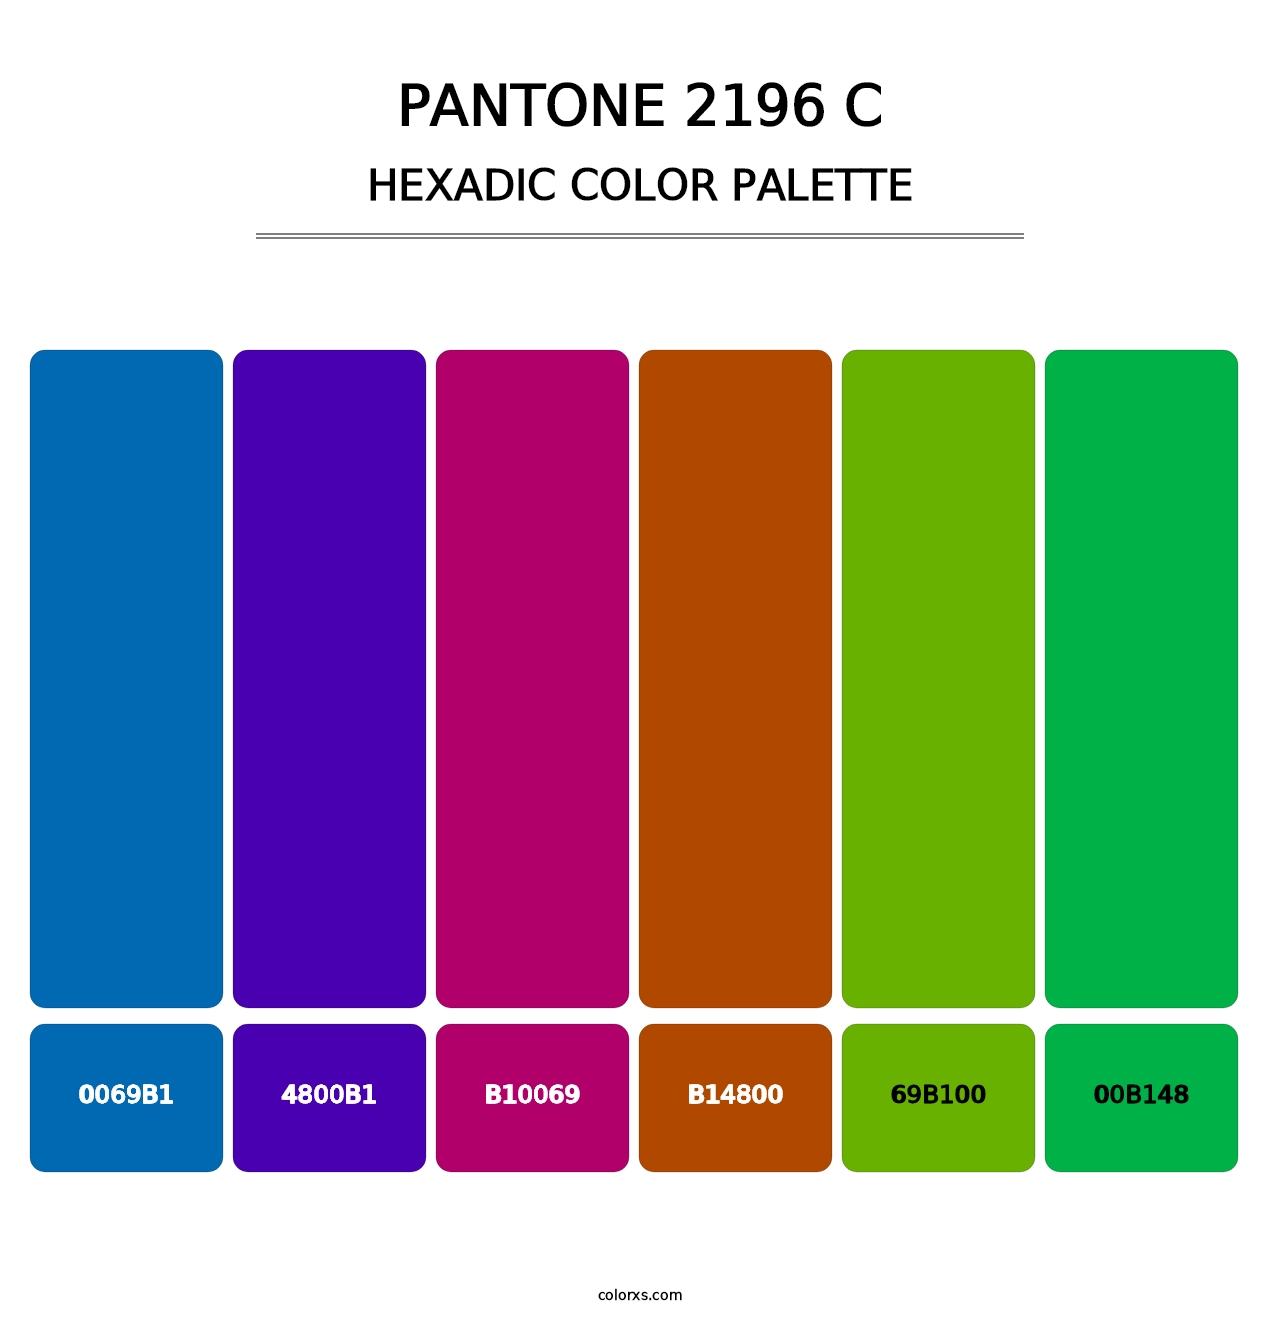 PANTONE 2196 C - Hexadic Color Palette